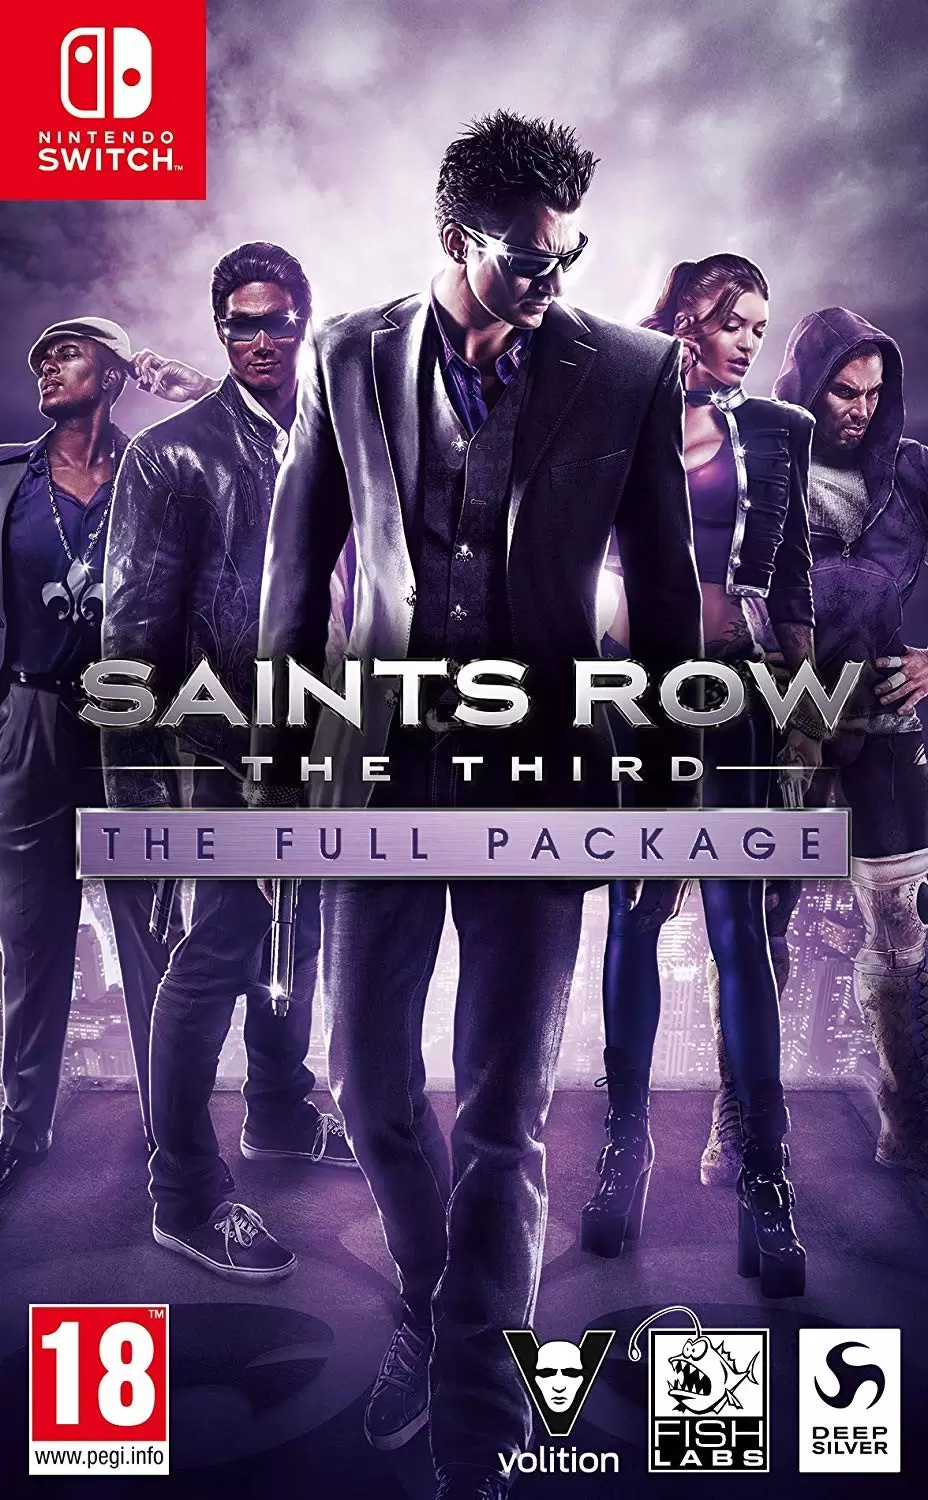 Nintendo Switch Games - Saints Row The Third